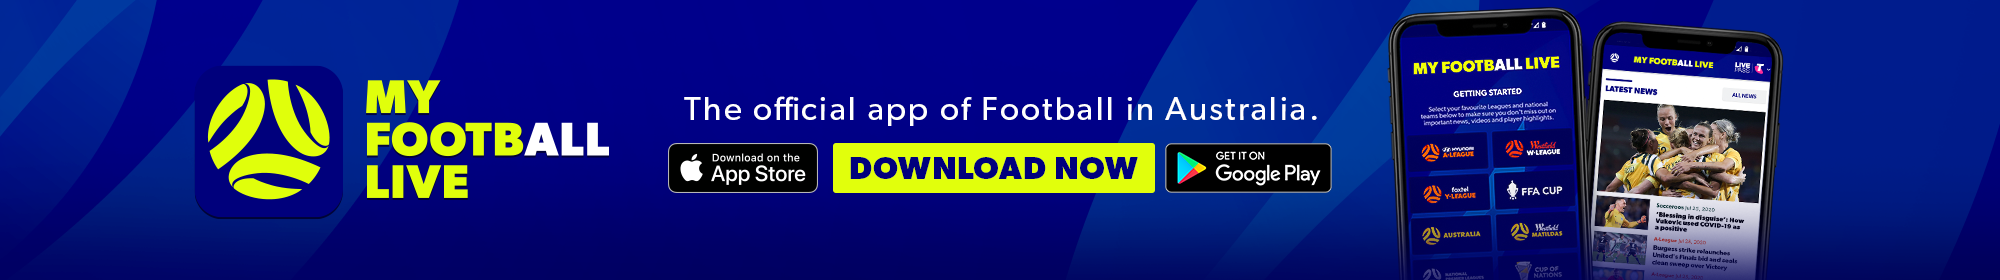 MyFootball App - Thin Banner